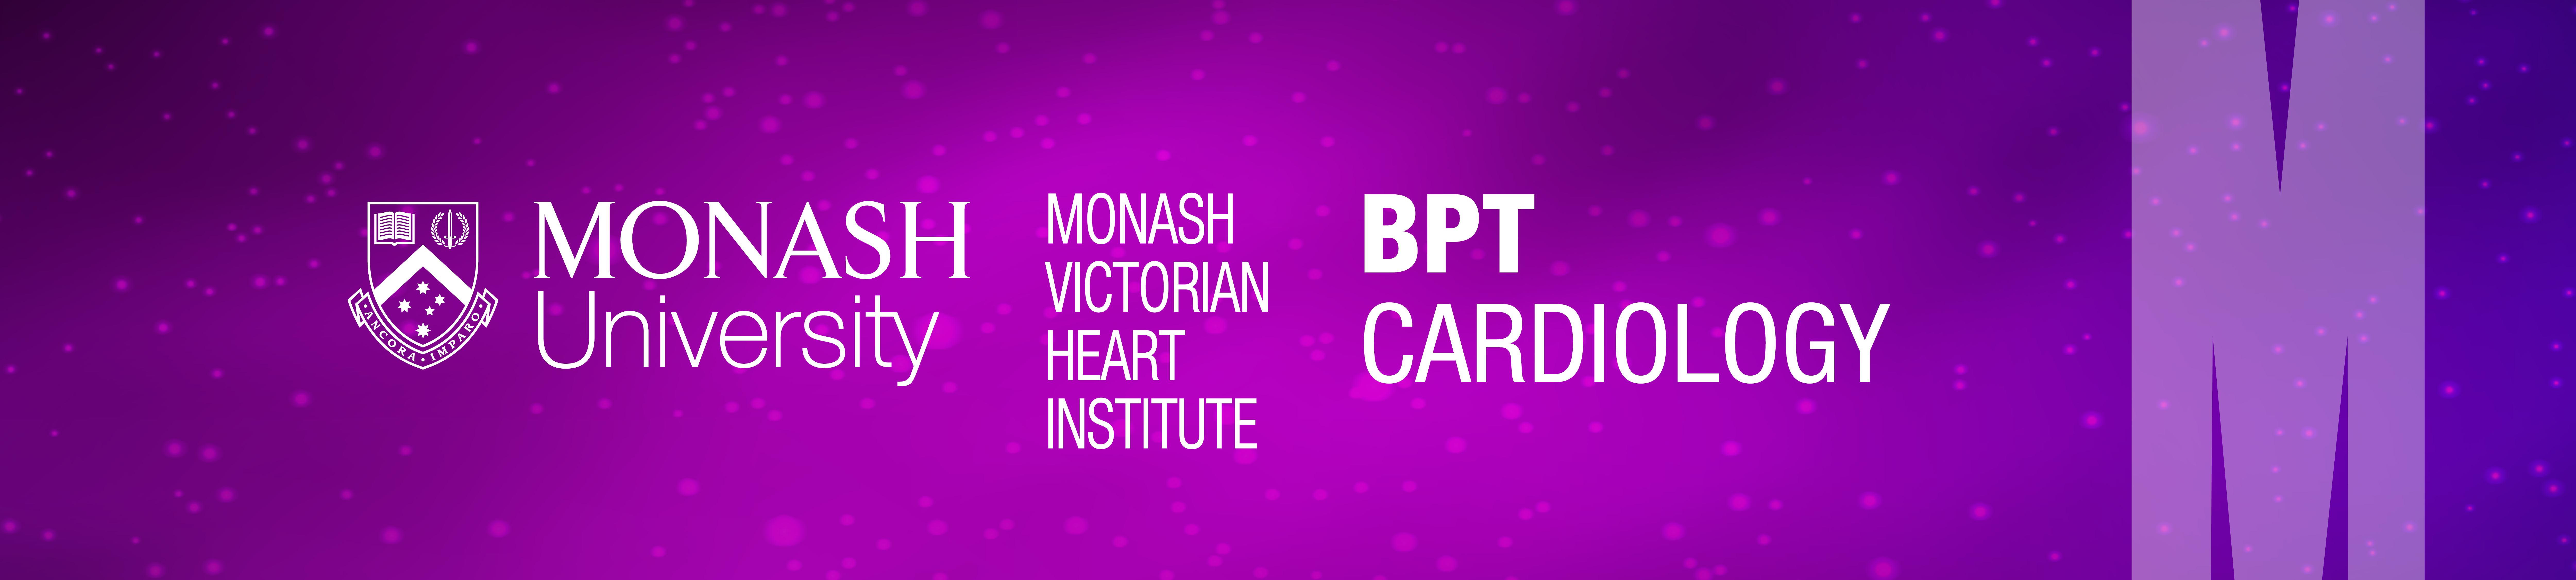 Course Image Monash Victorian Heart Institute - BPT Cardiology